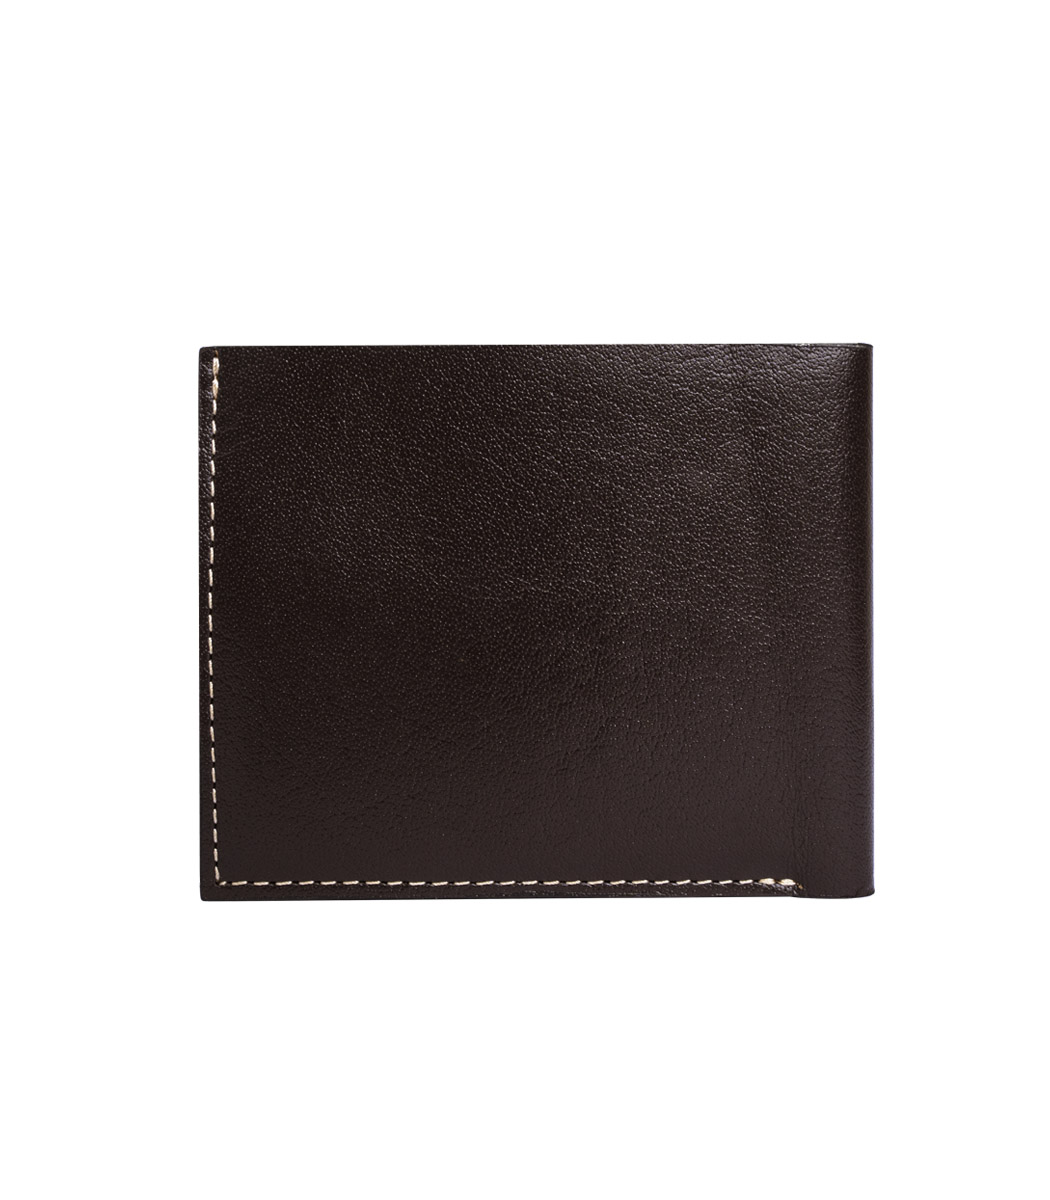 classic minimalist wallet for men